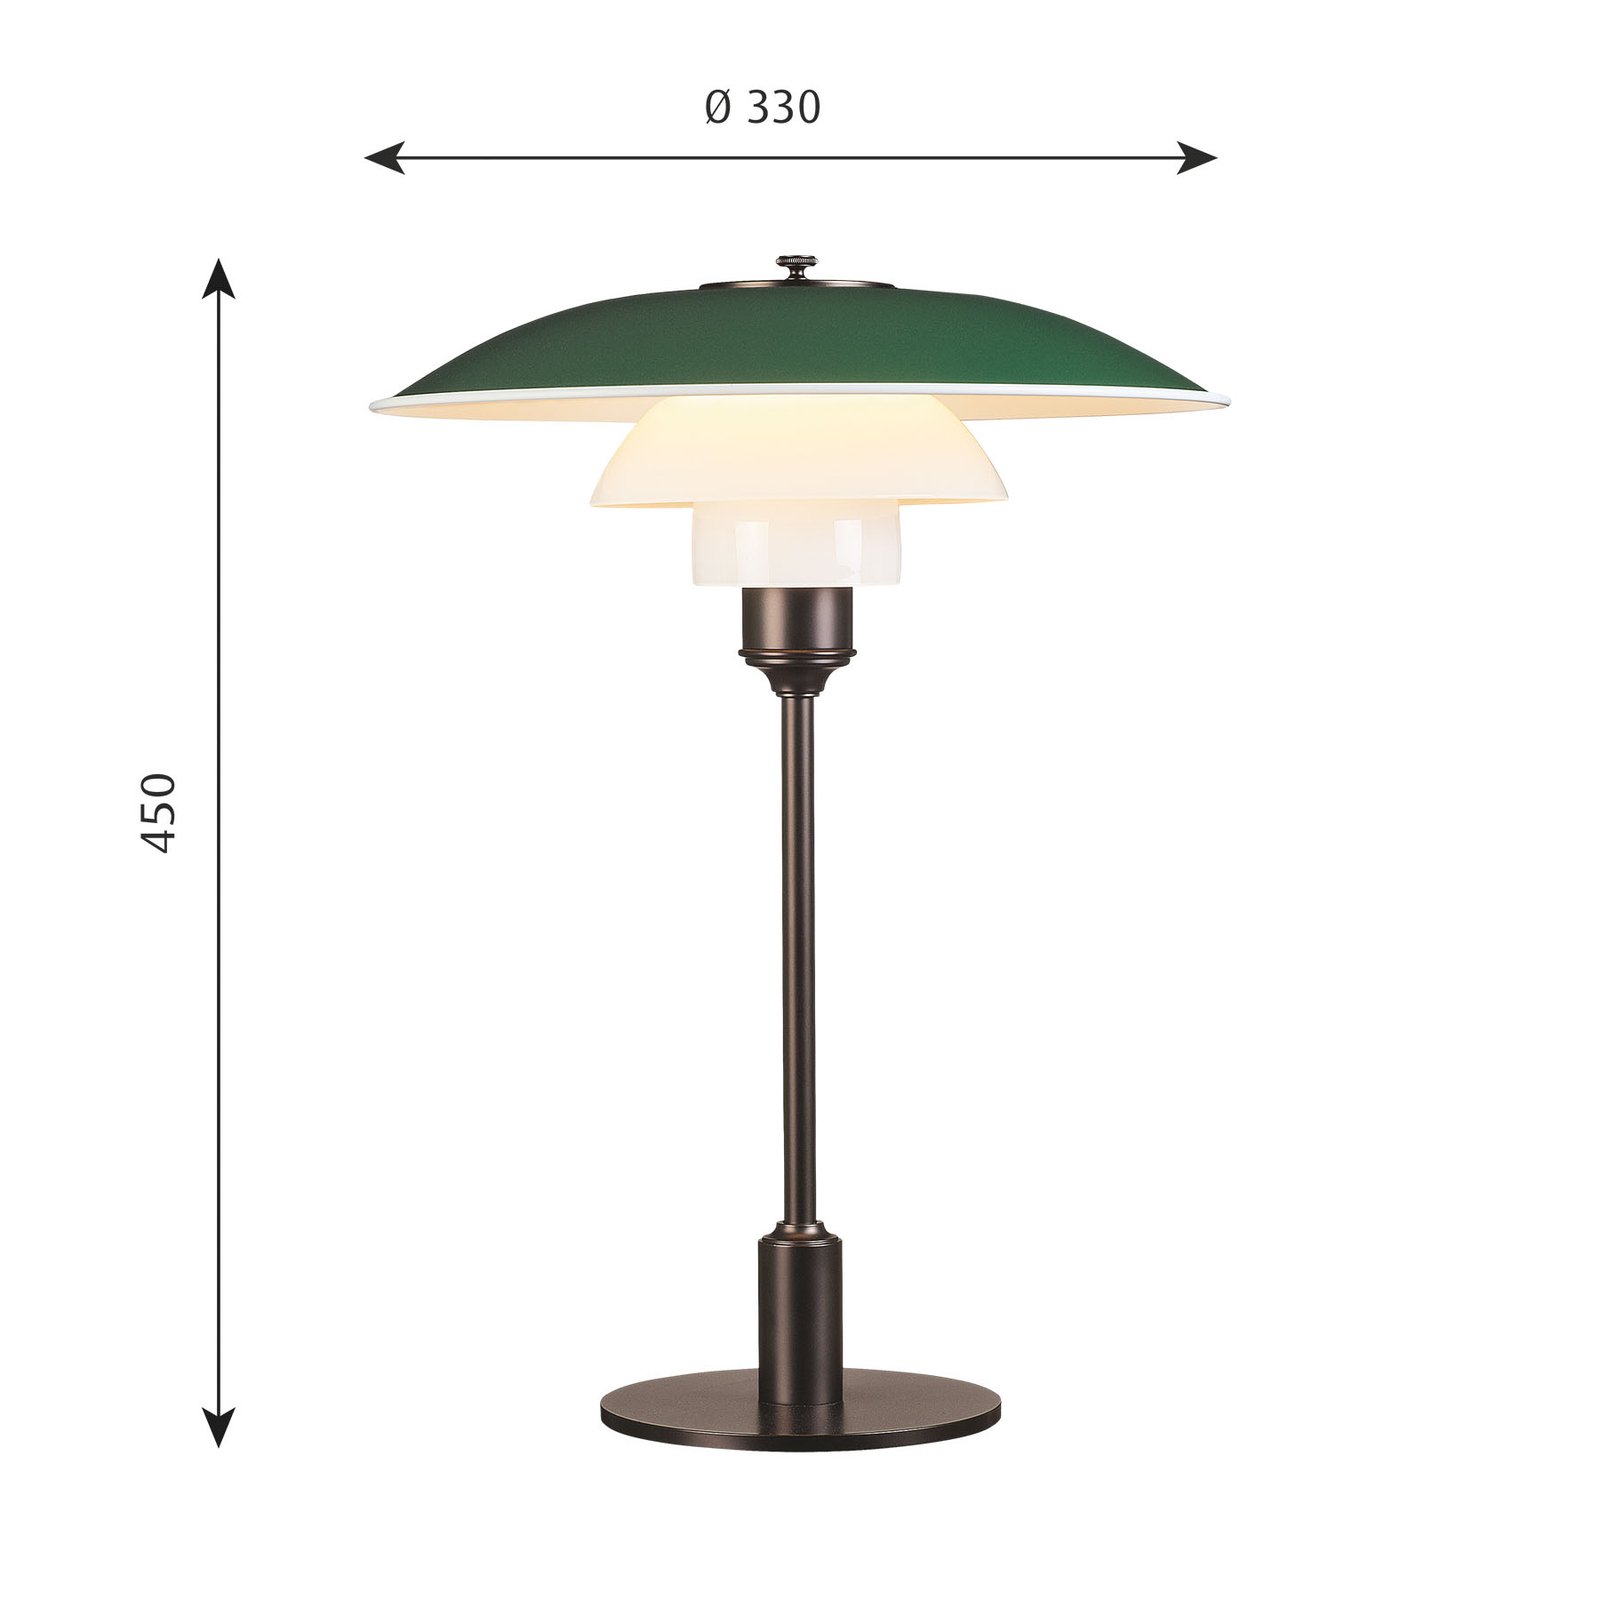 PH 3 1/2-2 1/2 table lamp brown/green